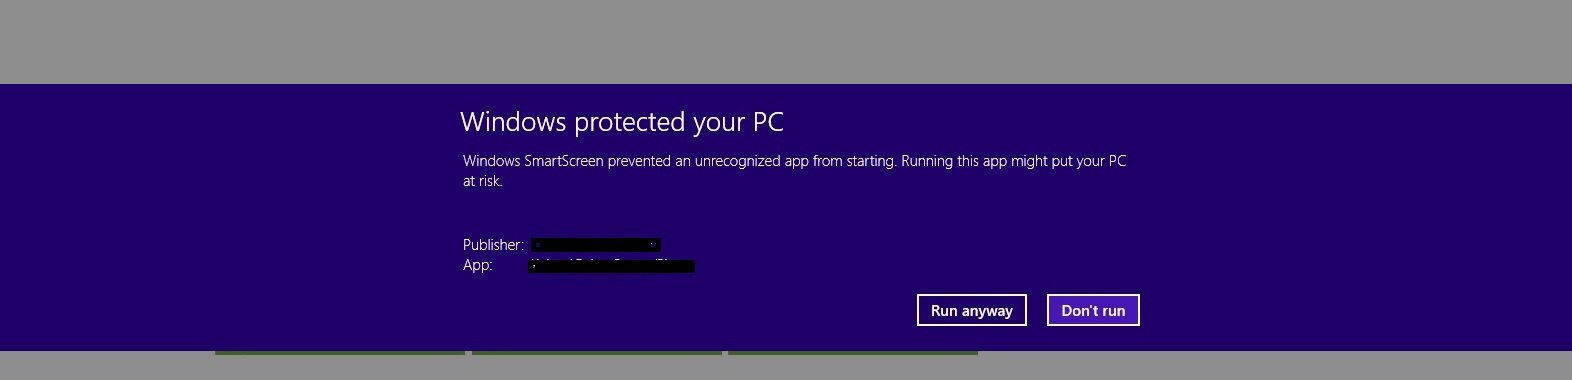 Warning Windows 8 - Copy.JPG